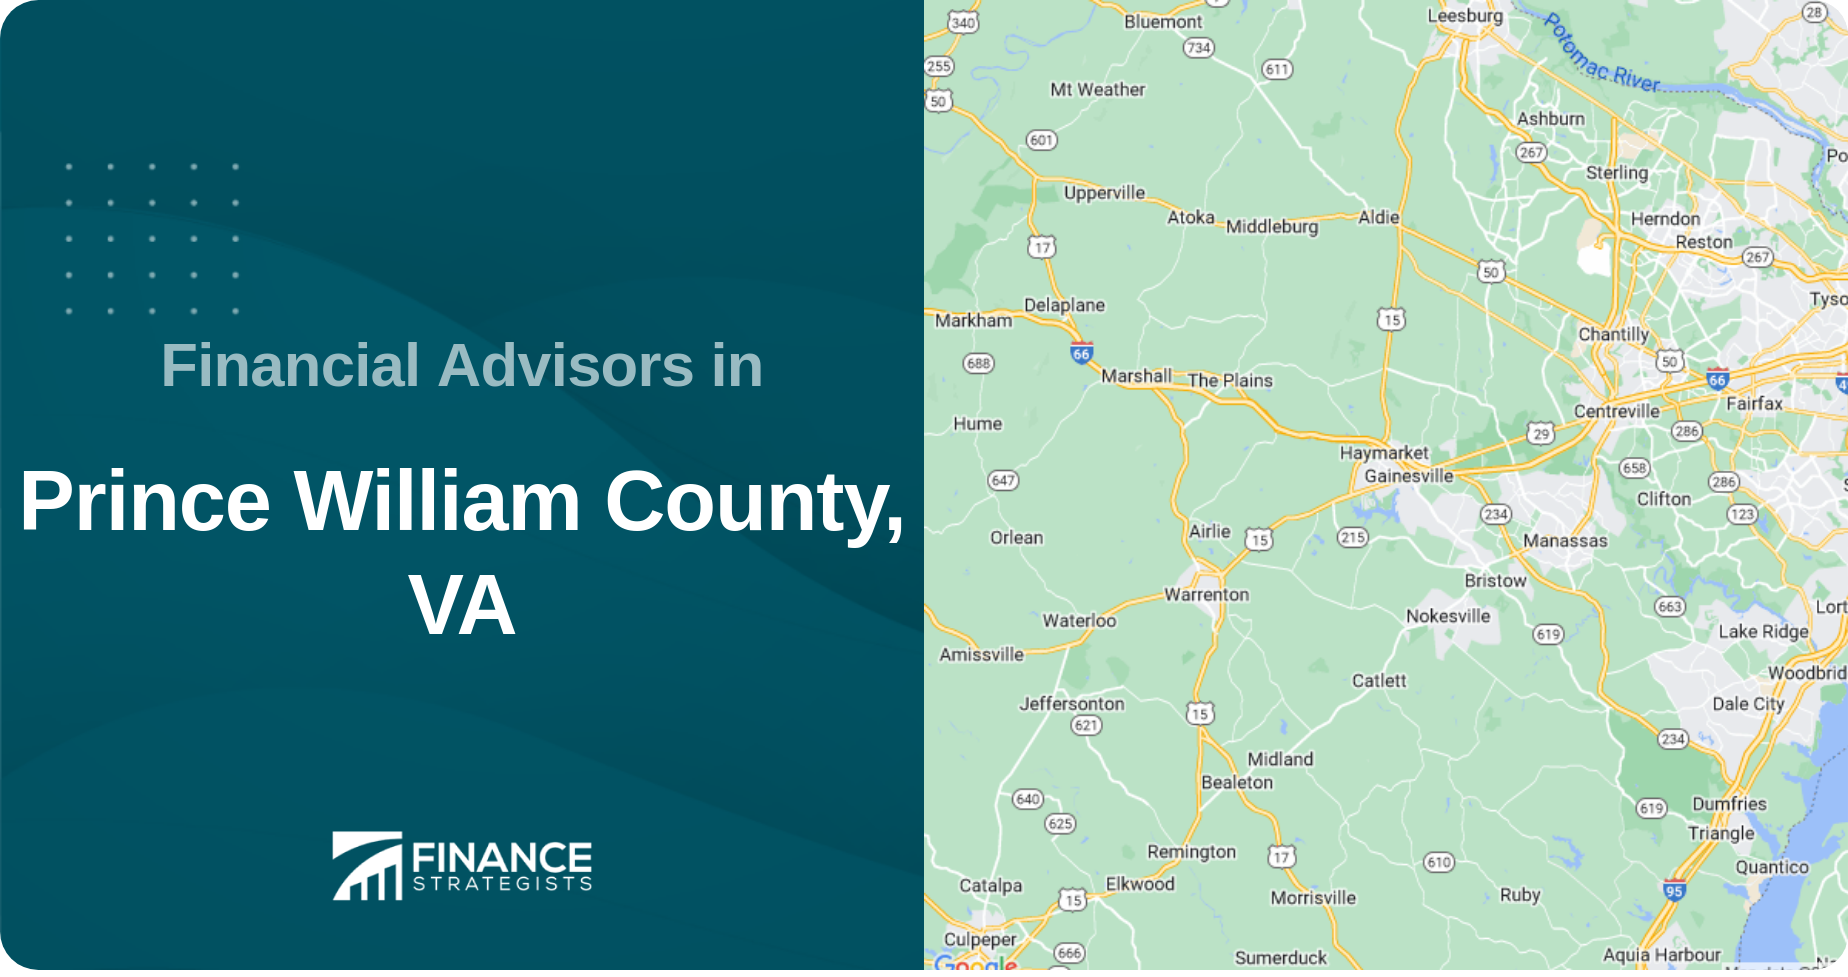 Financial Advisors in Prince William County, VA